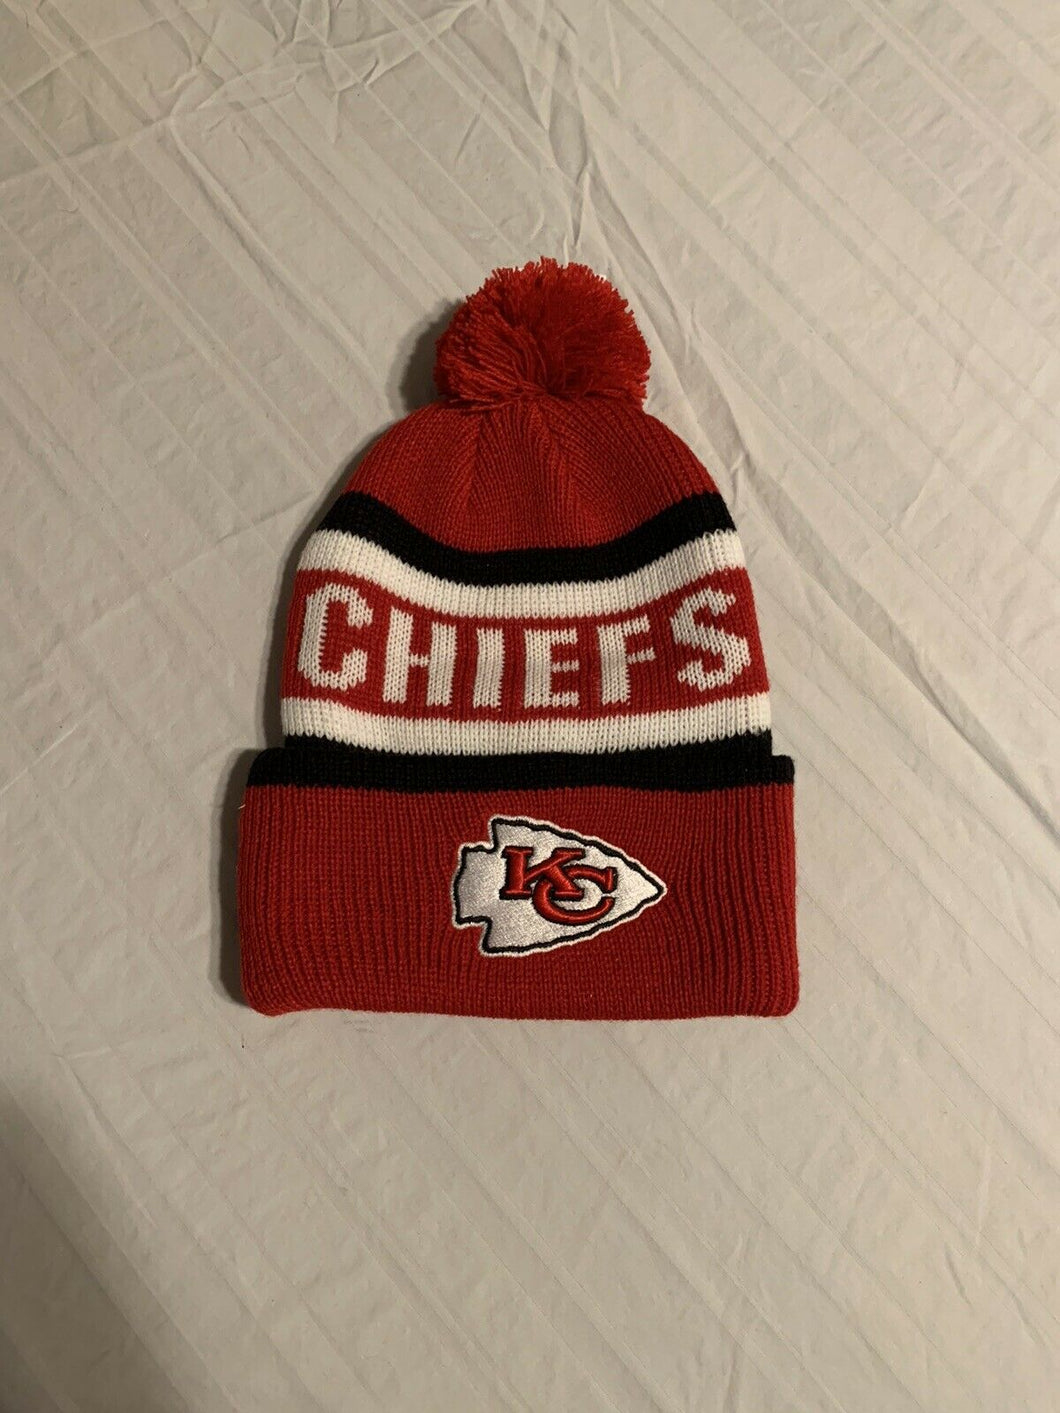 Kansas City Chiefs NFL OTS Red Knit Beanie Ski Cap Hat with Pom - Casey's Sports Store